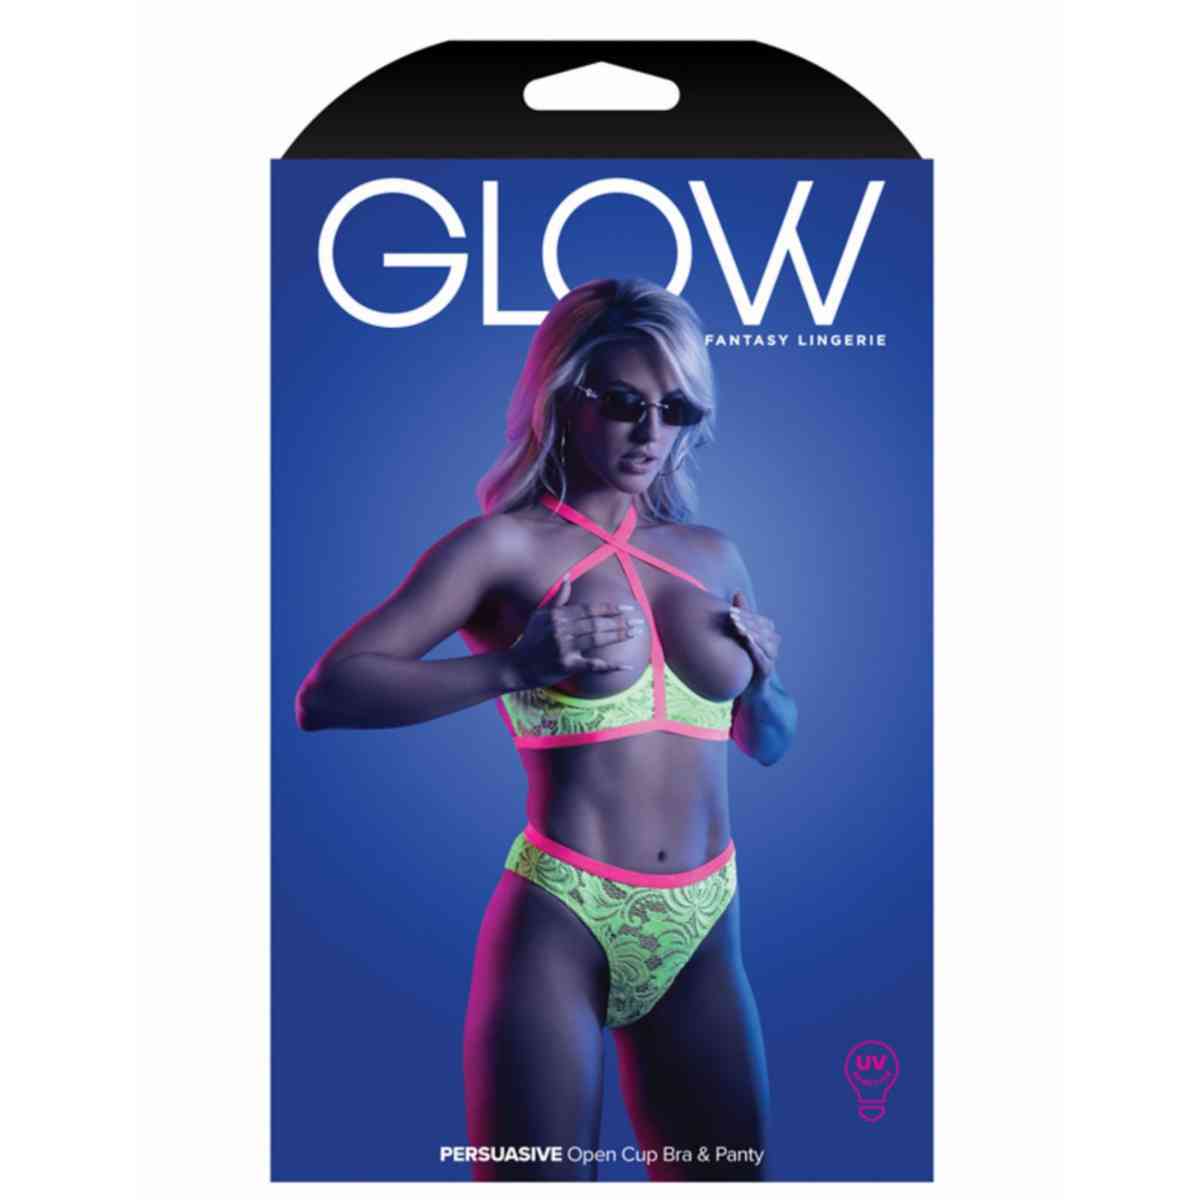 Verpackung Frau in sexy Neon-BH mit offenem Cup und Panty 